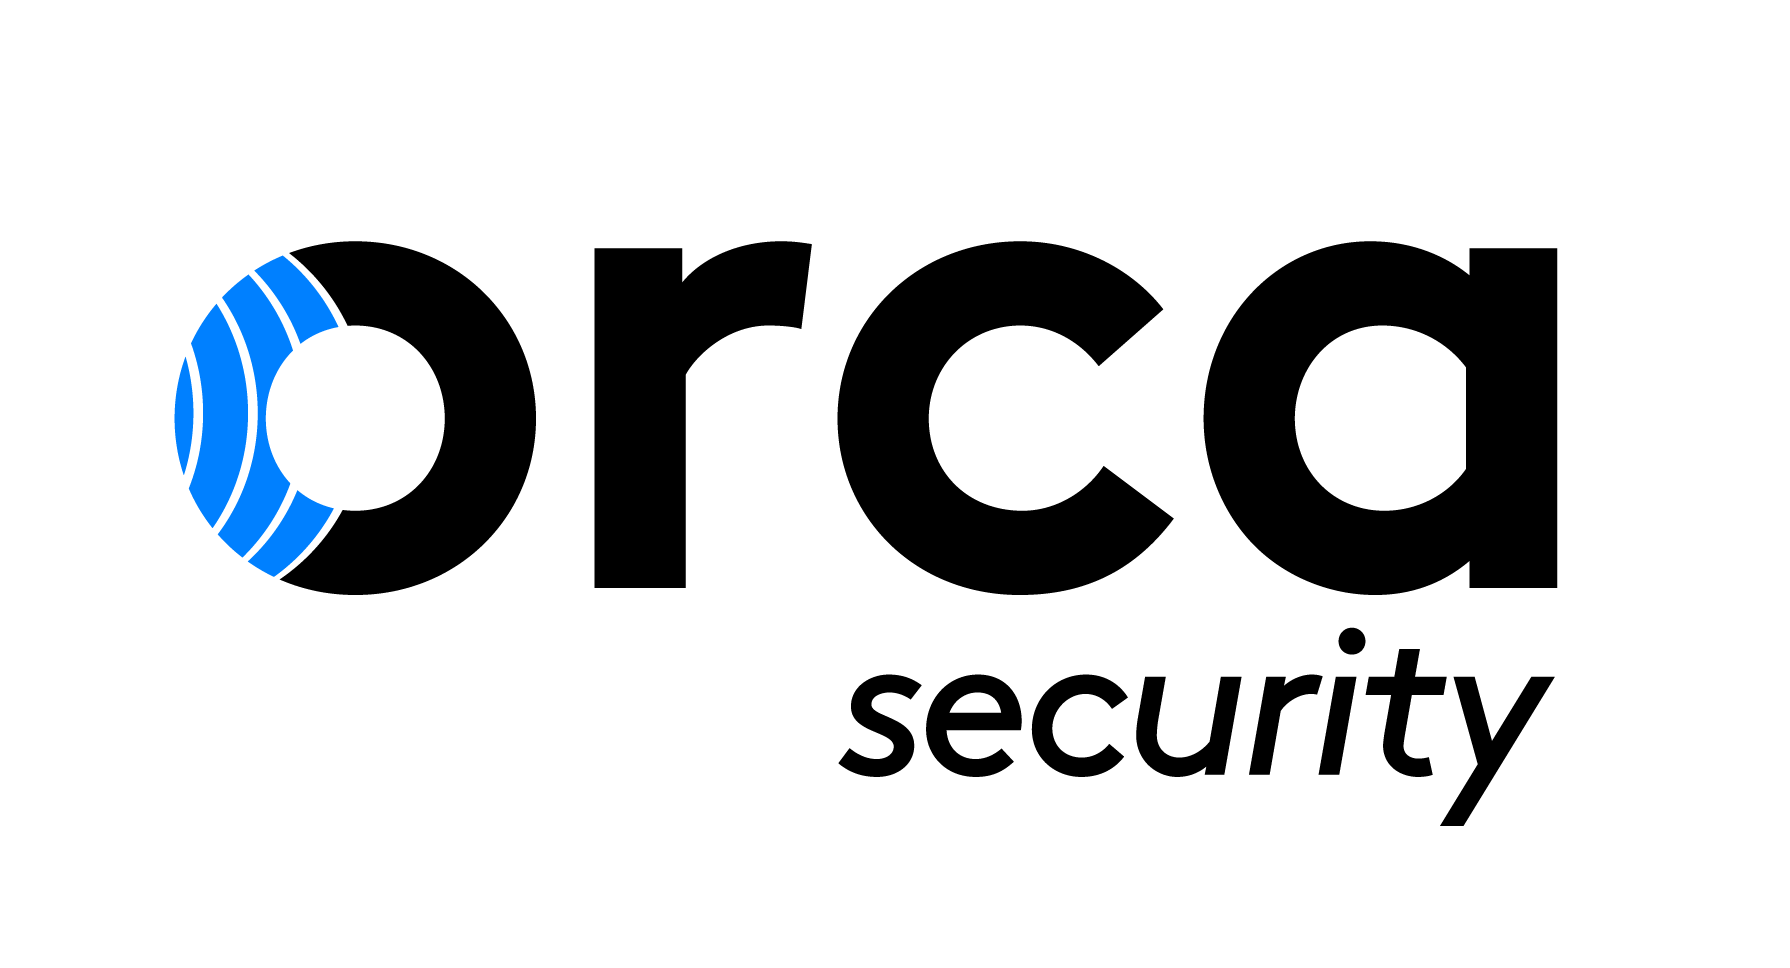 orca_logo.png